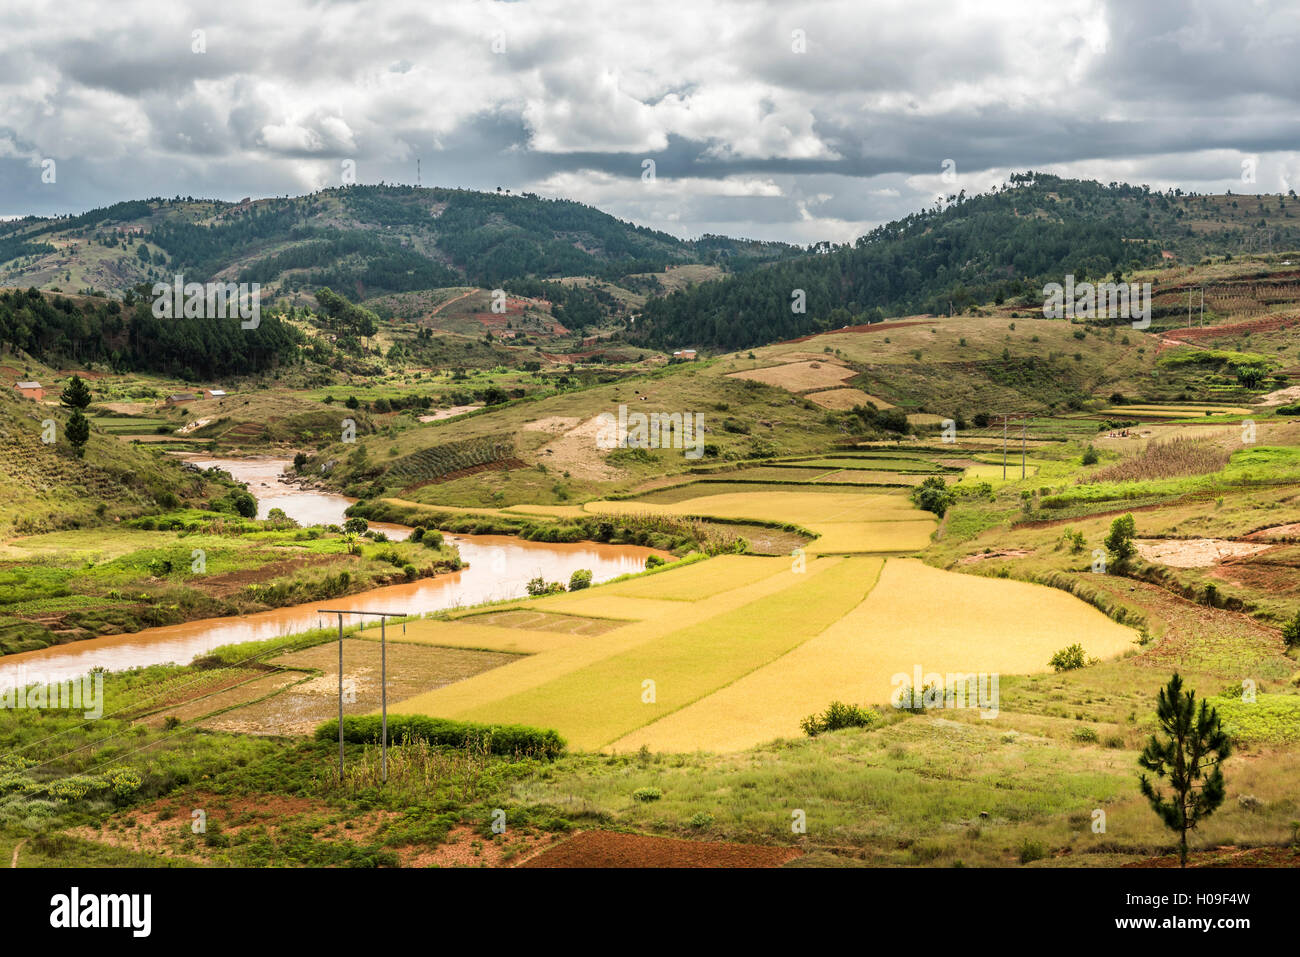 Reis-Reisfeld-Landschaft in der Nähe von Antananarivo, Provinz Antananarivo, östlichen Madagaskar, Afrika Stockfoto